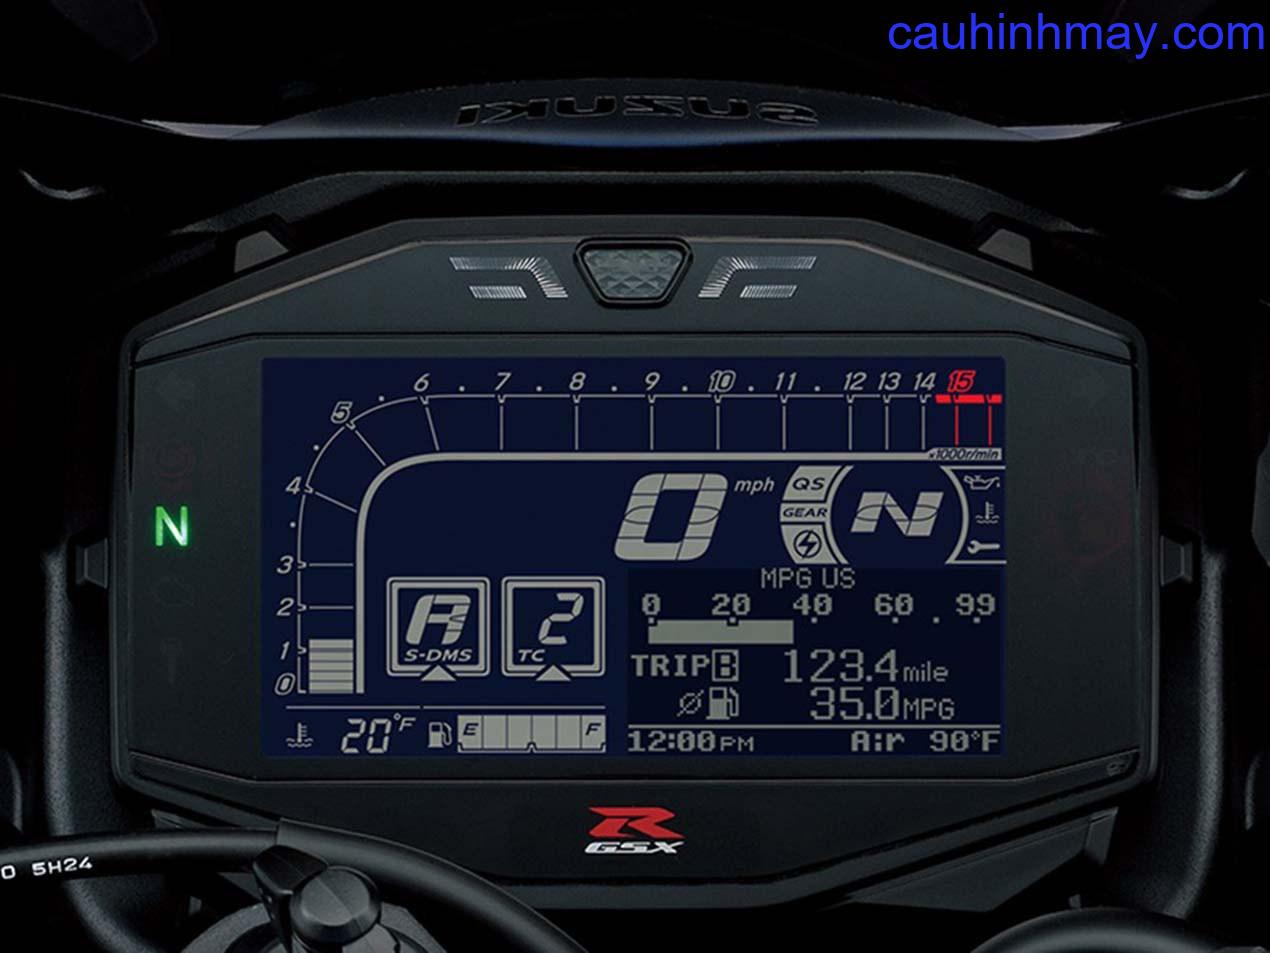 SUZUKI GSX-R 1000R MOTO GP - cauhinhmay.com